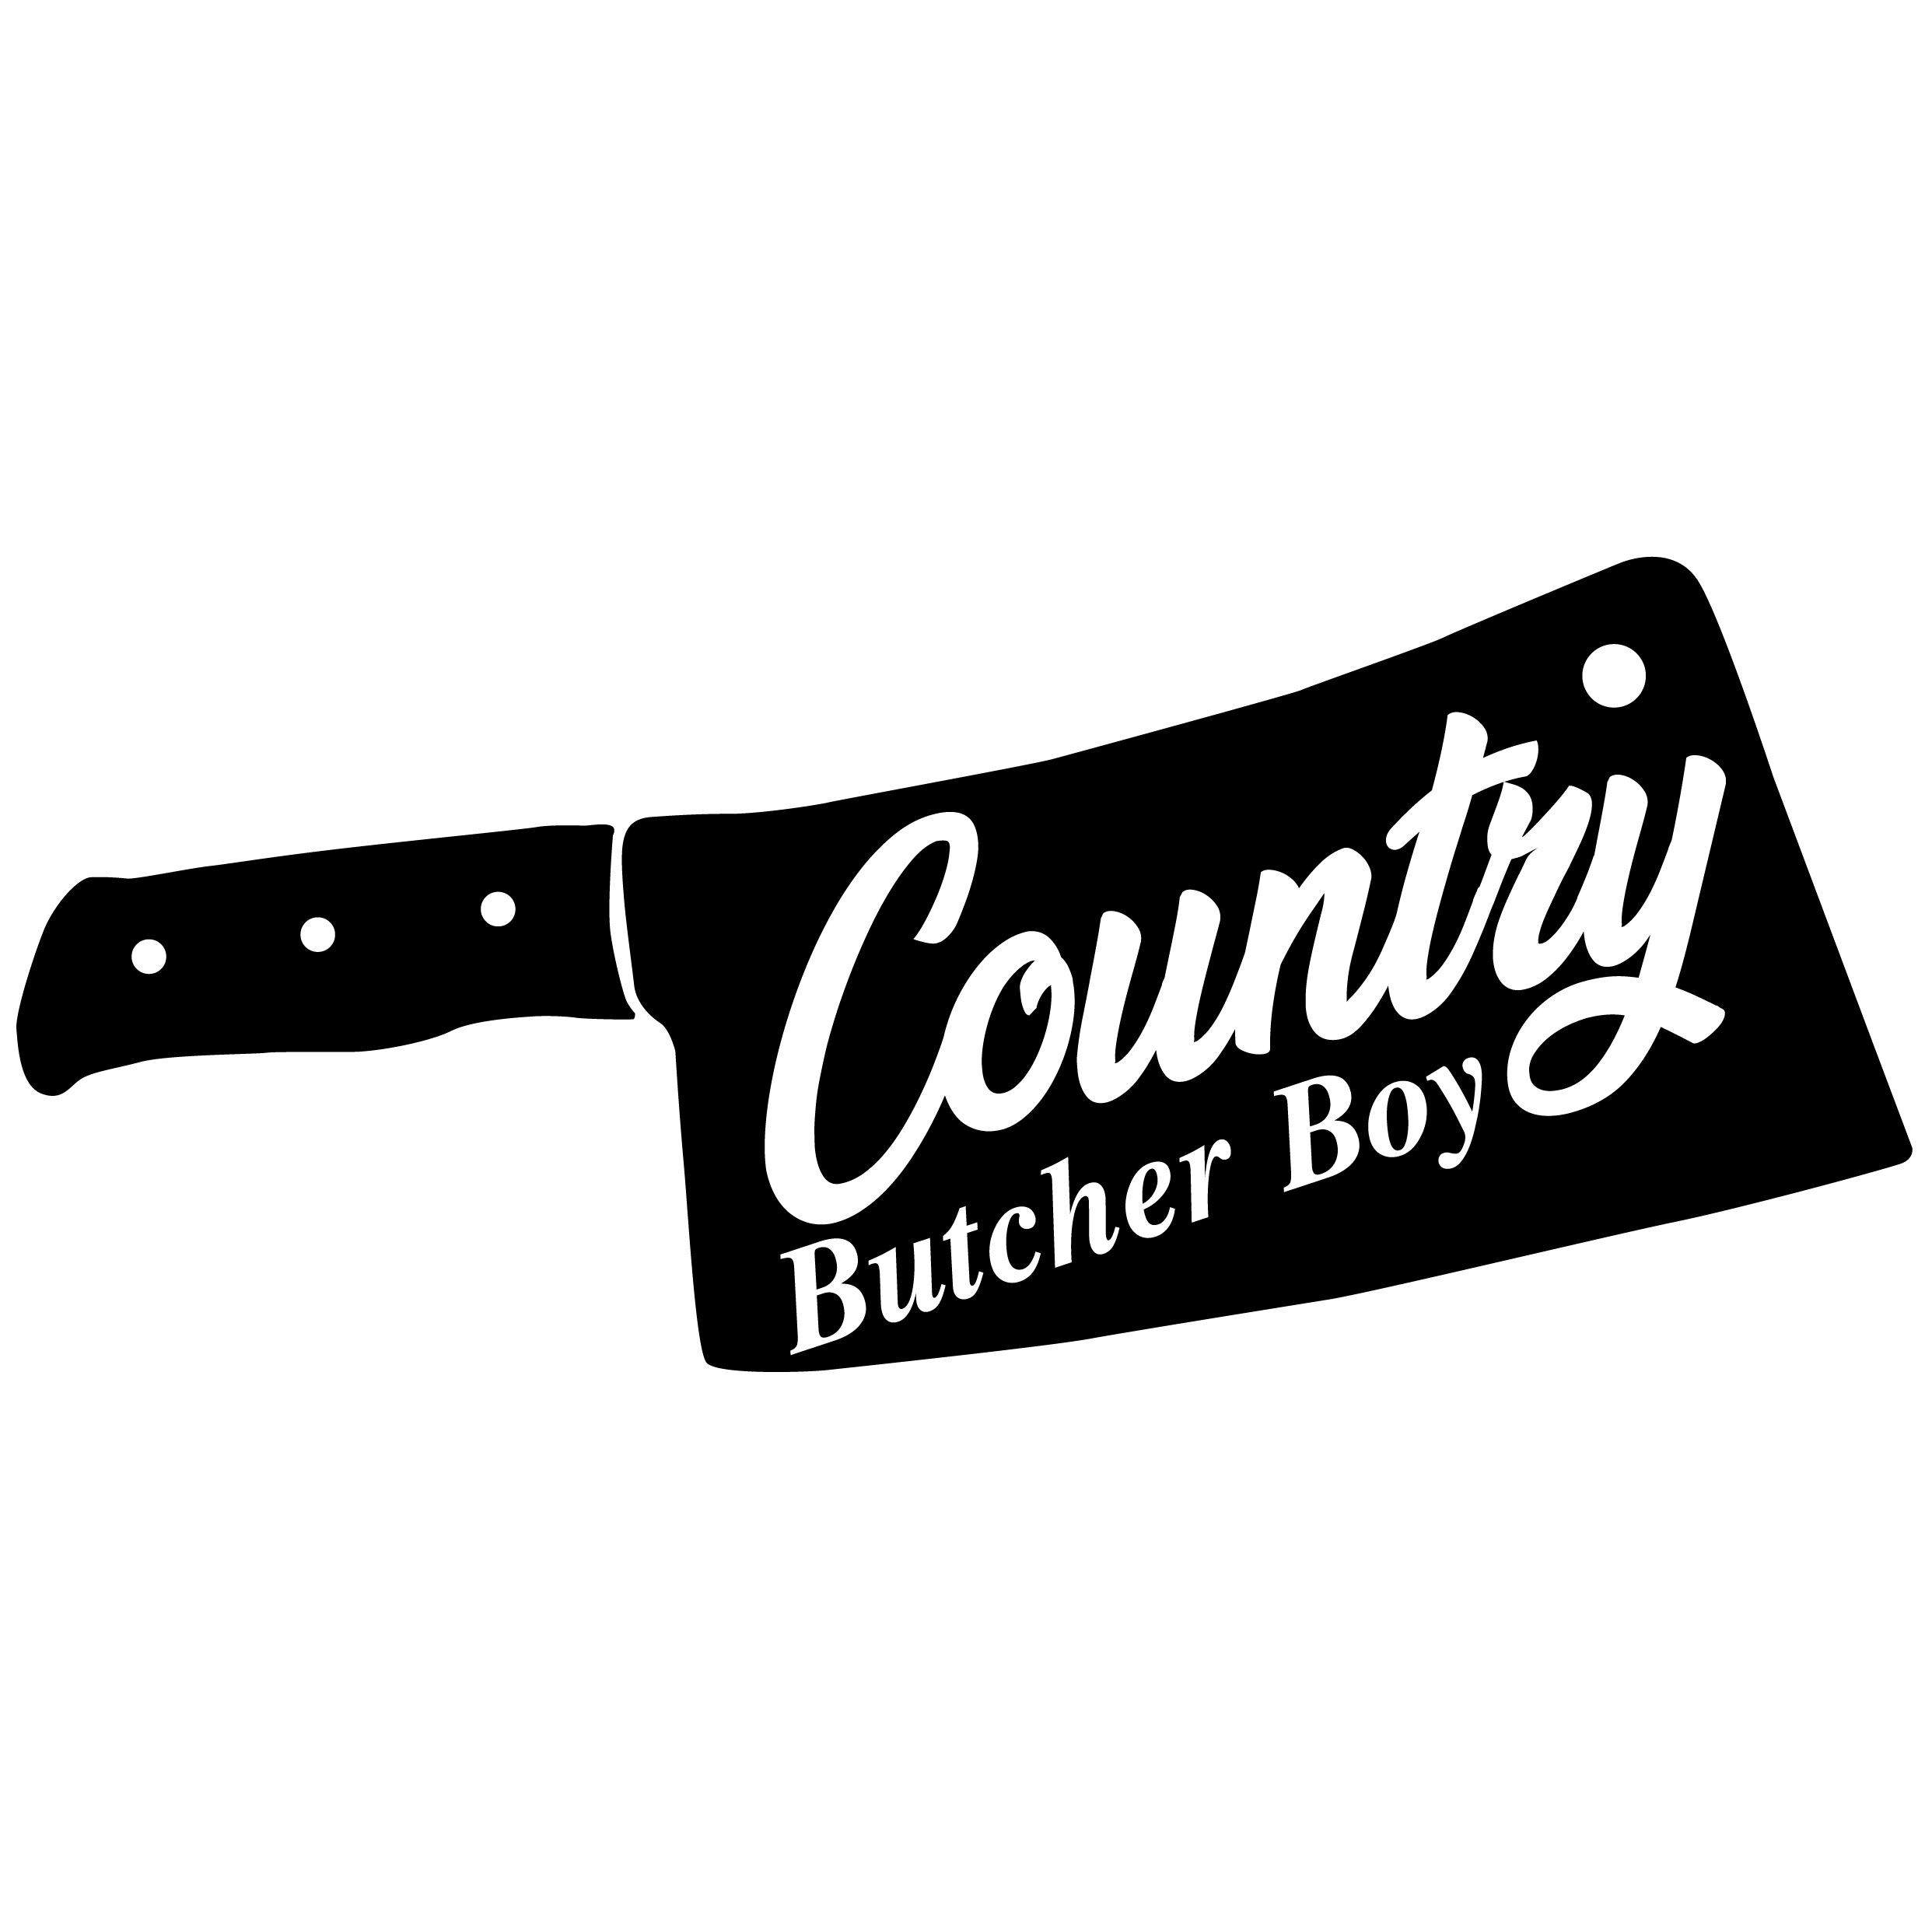 Country butcher boy